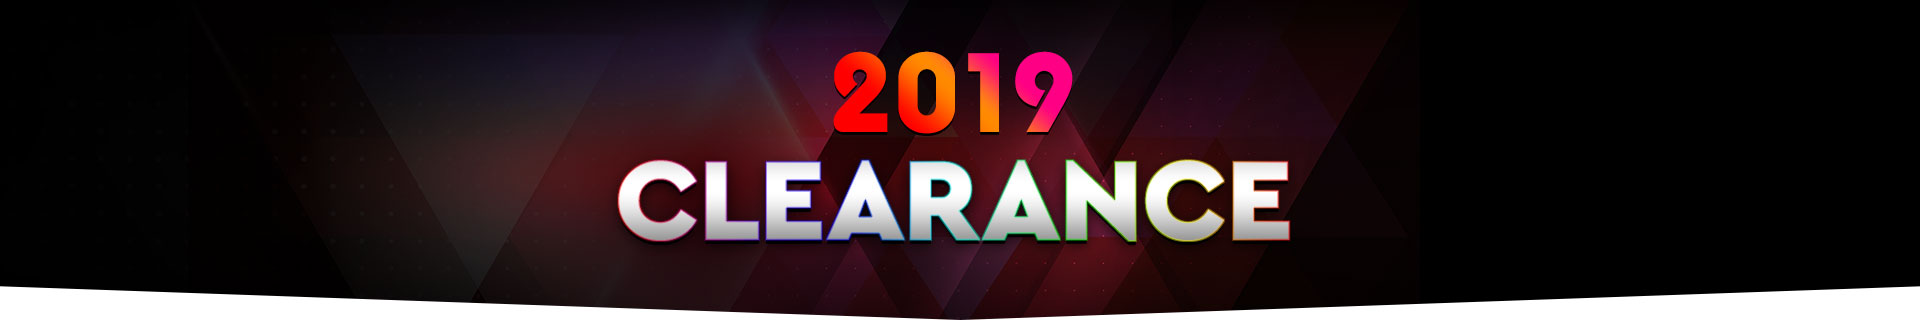 2019 Clearance